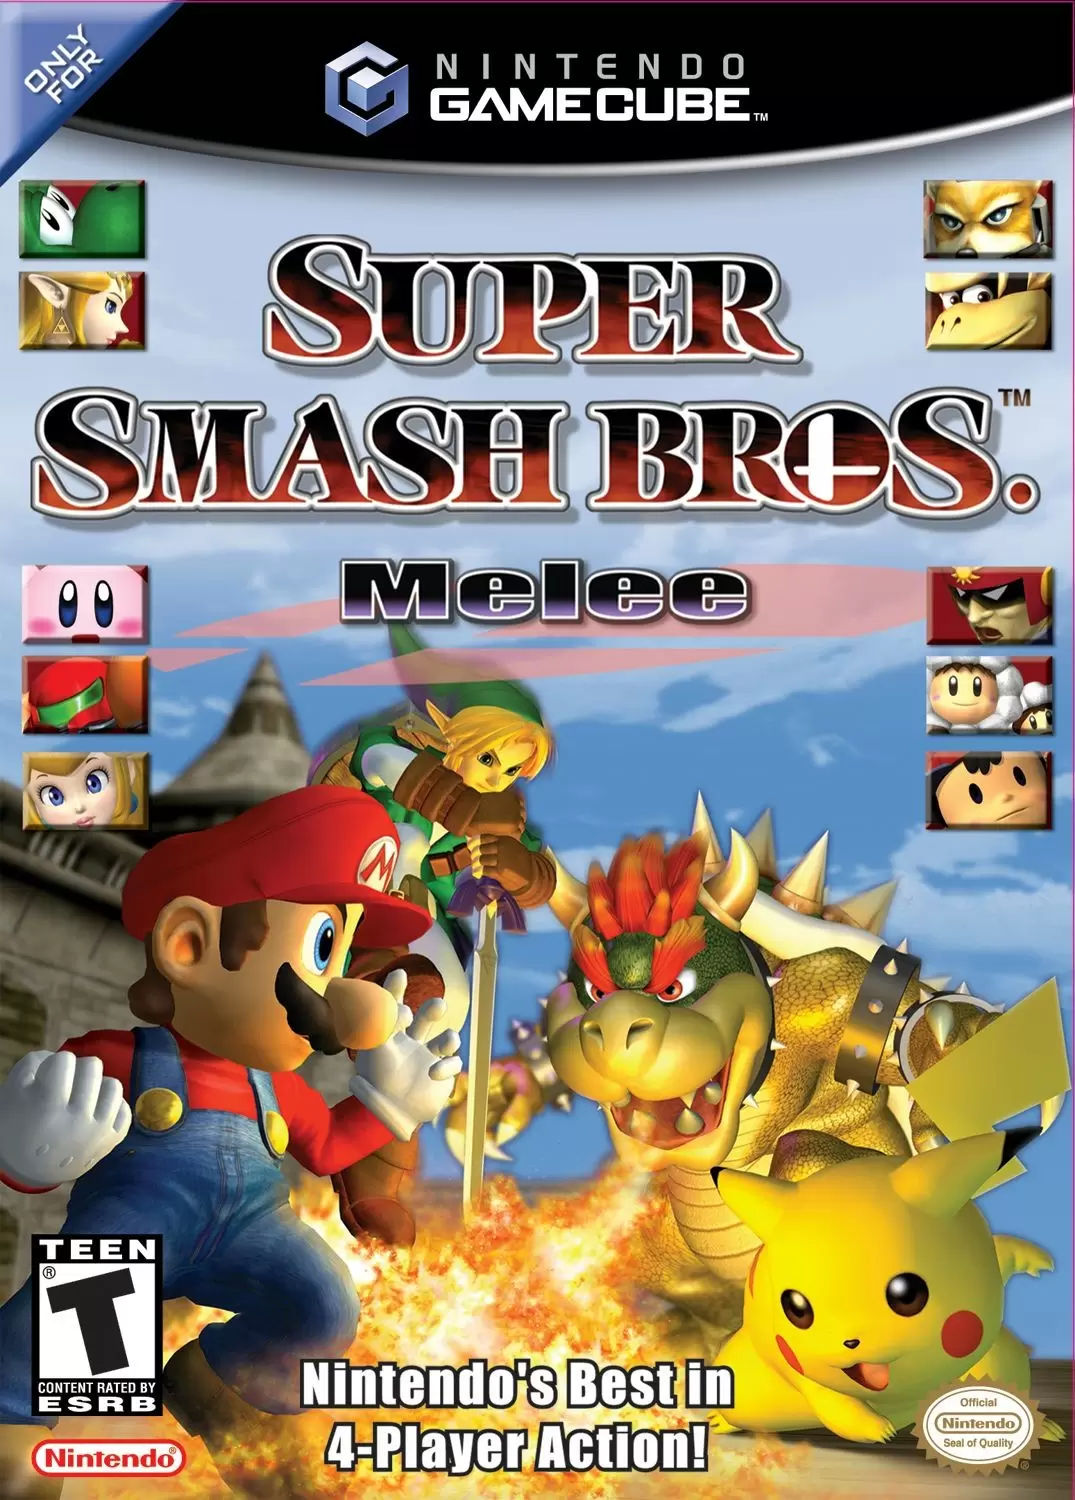 Nintendo Gamecube Games - Super Smash Bros. Melee